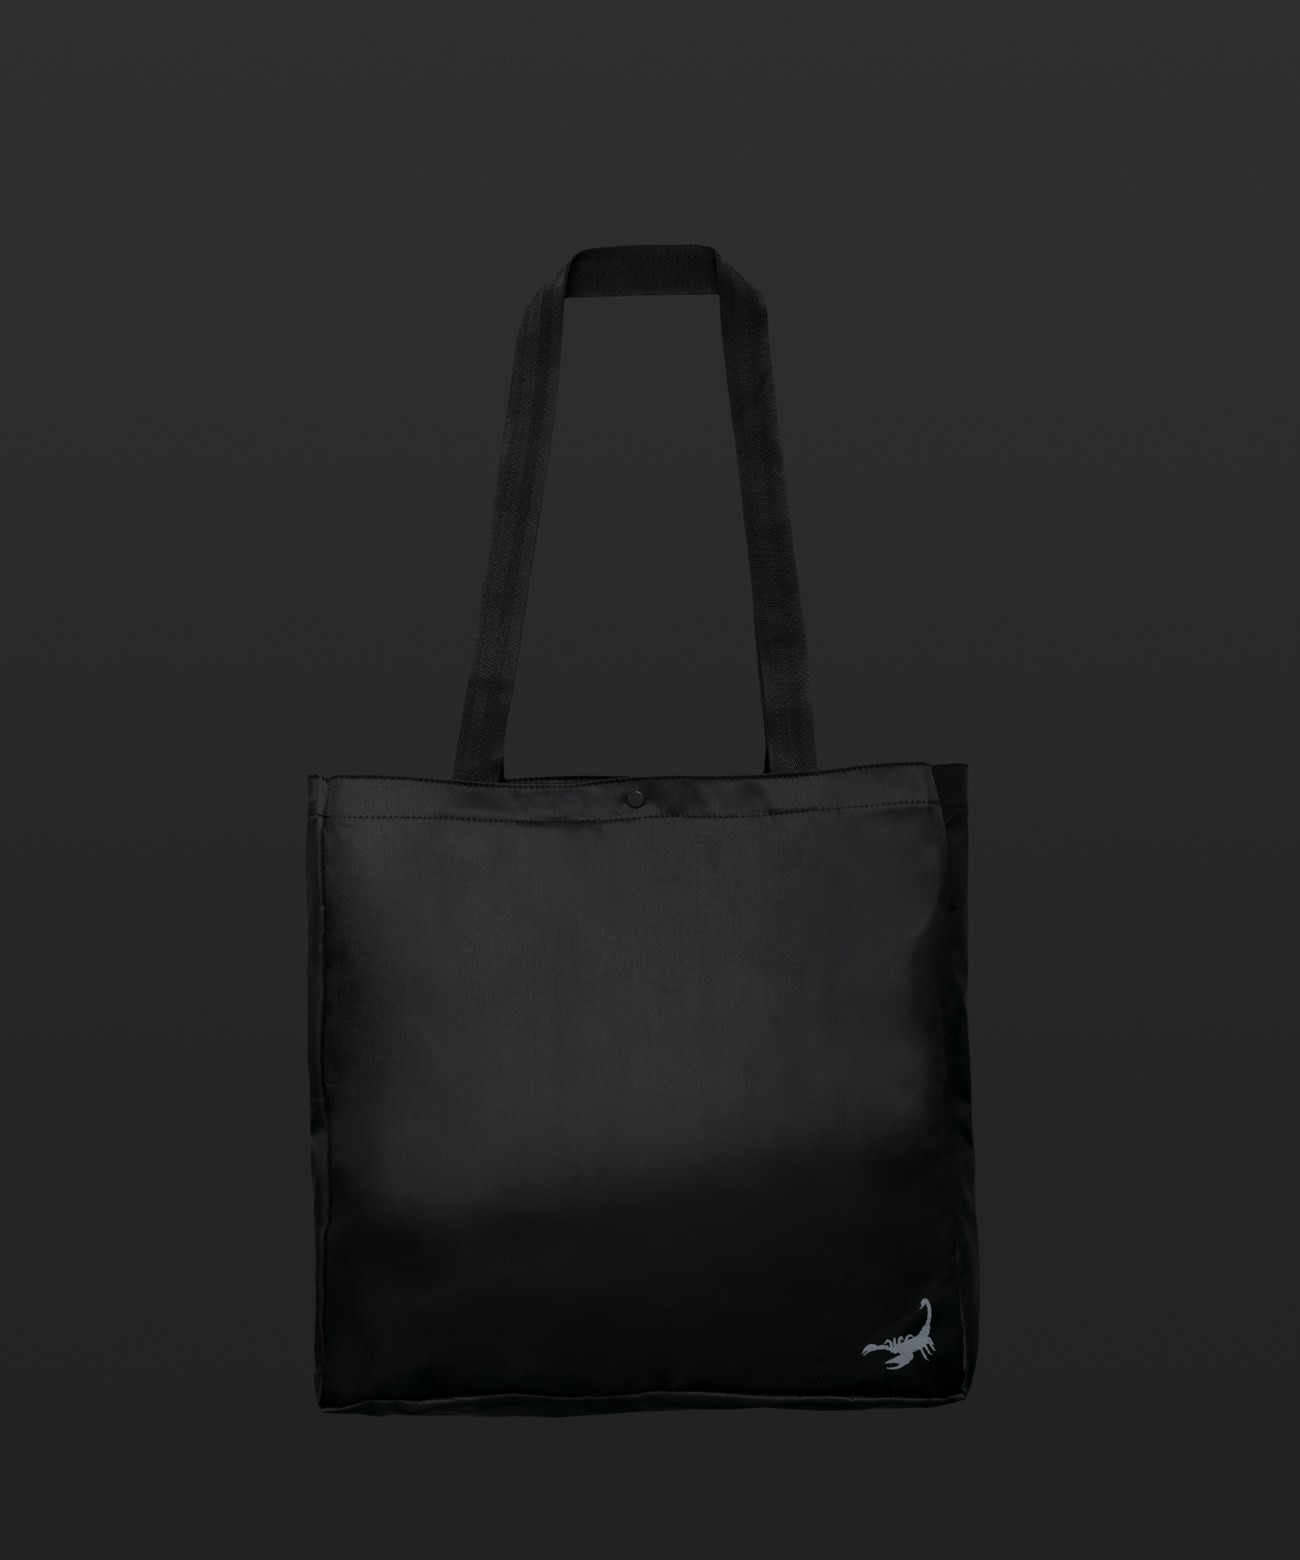 tote bag noir xxxtasy 8LI38Q 003 large